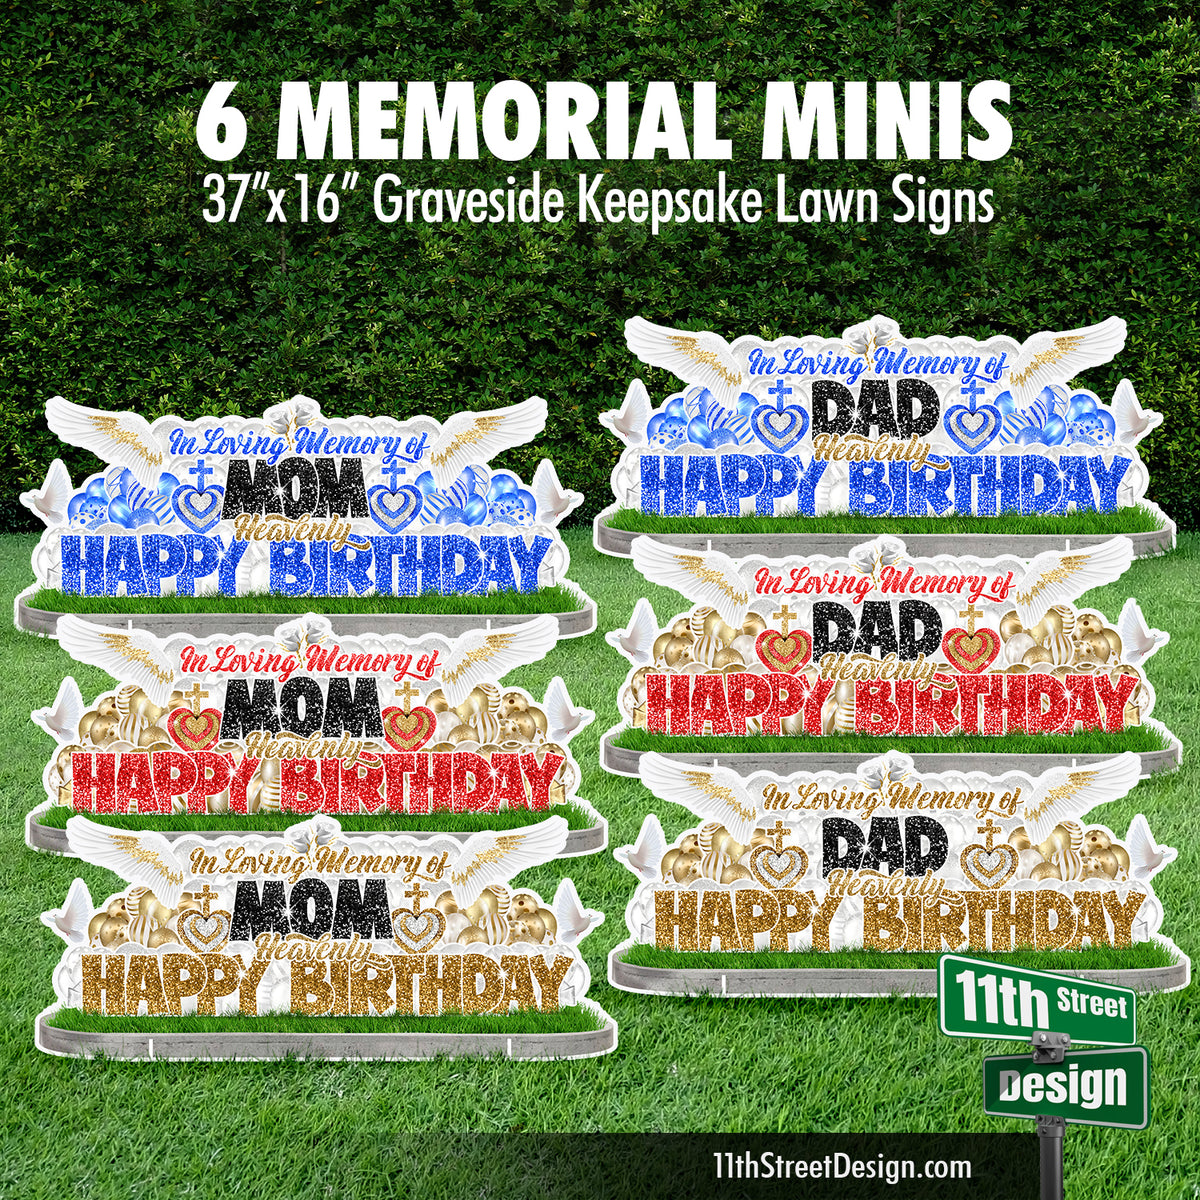 Memorial Minis Gravesite Keepsakes - Happy Heavenly Birthday